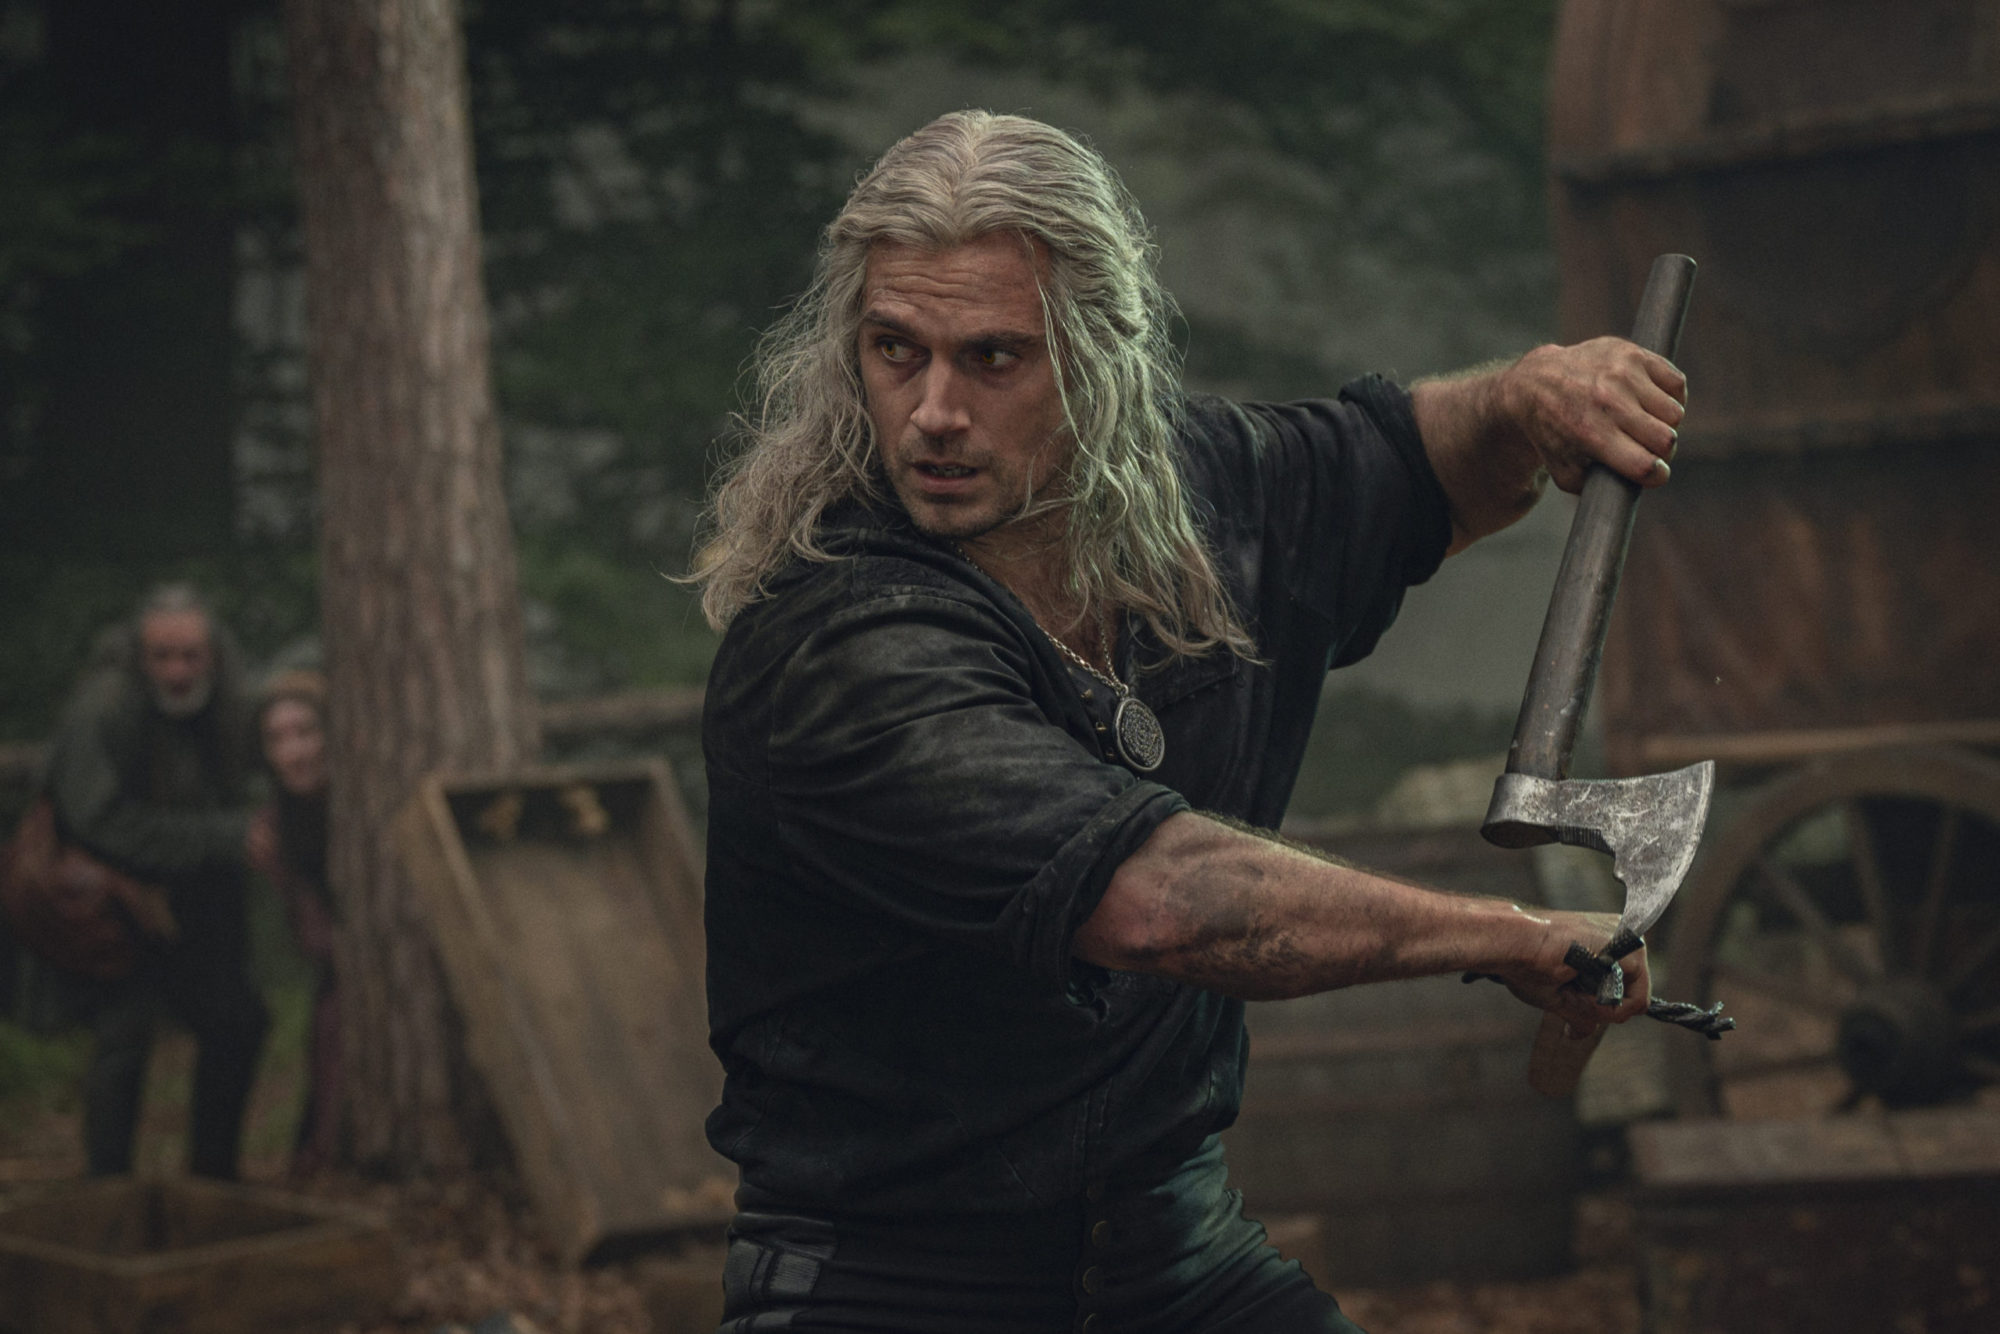 THE WITCHER - Season 4 New Look Trailer - Liam Hemsworth Arrives as Geralt